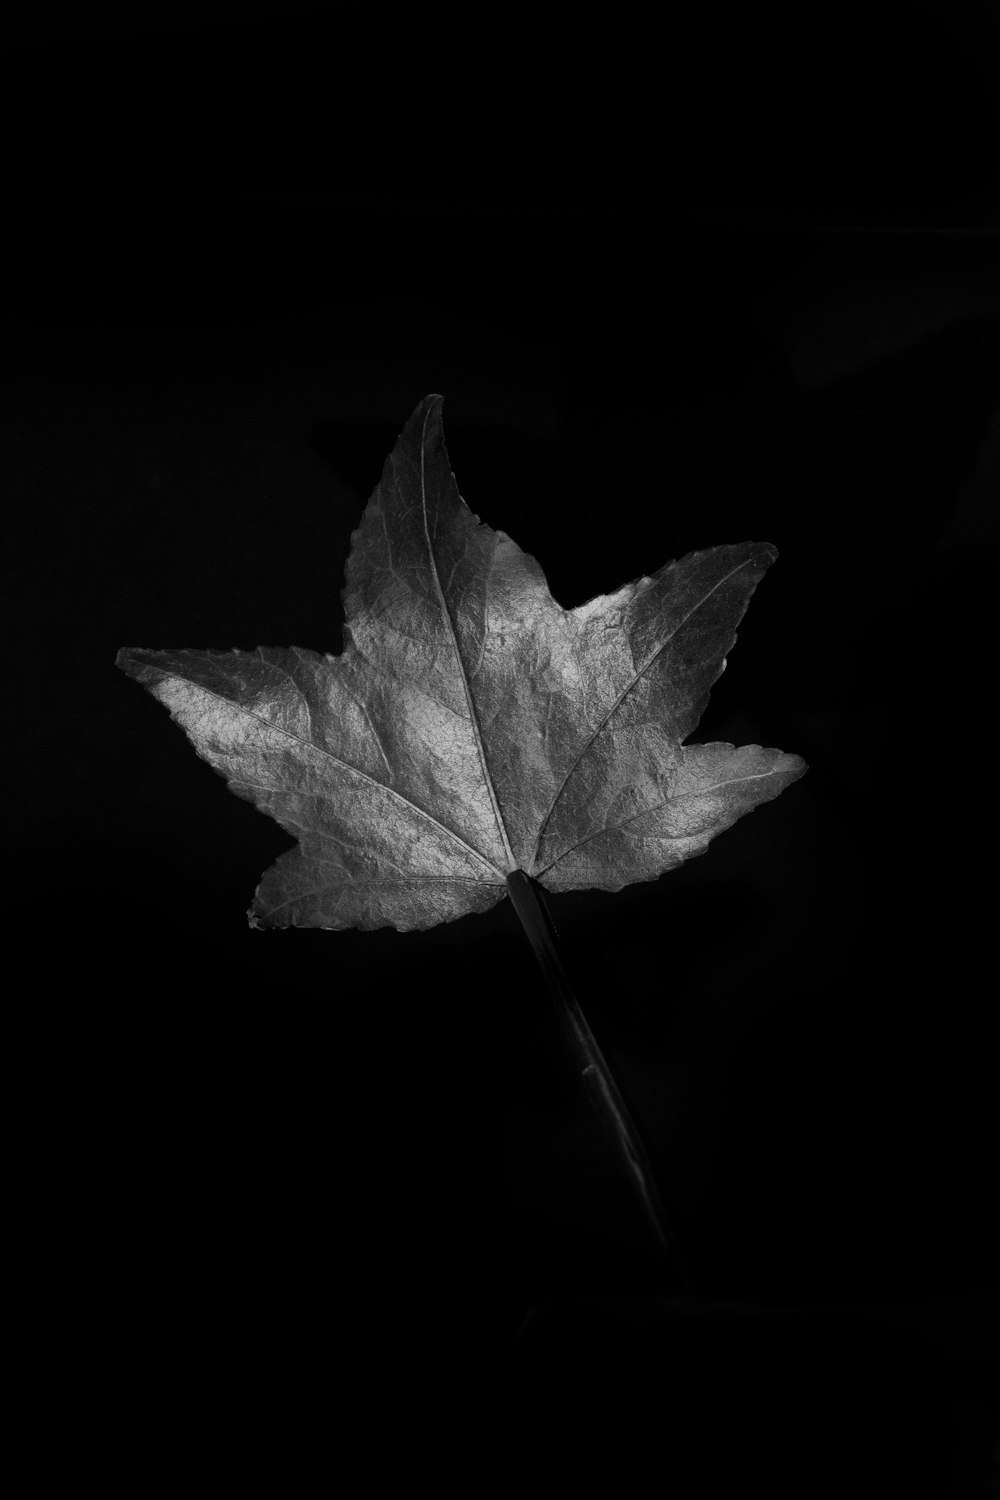 black maple leaf on black background photo – Free France Image on Unsplash